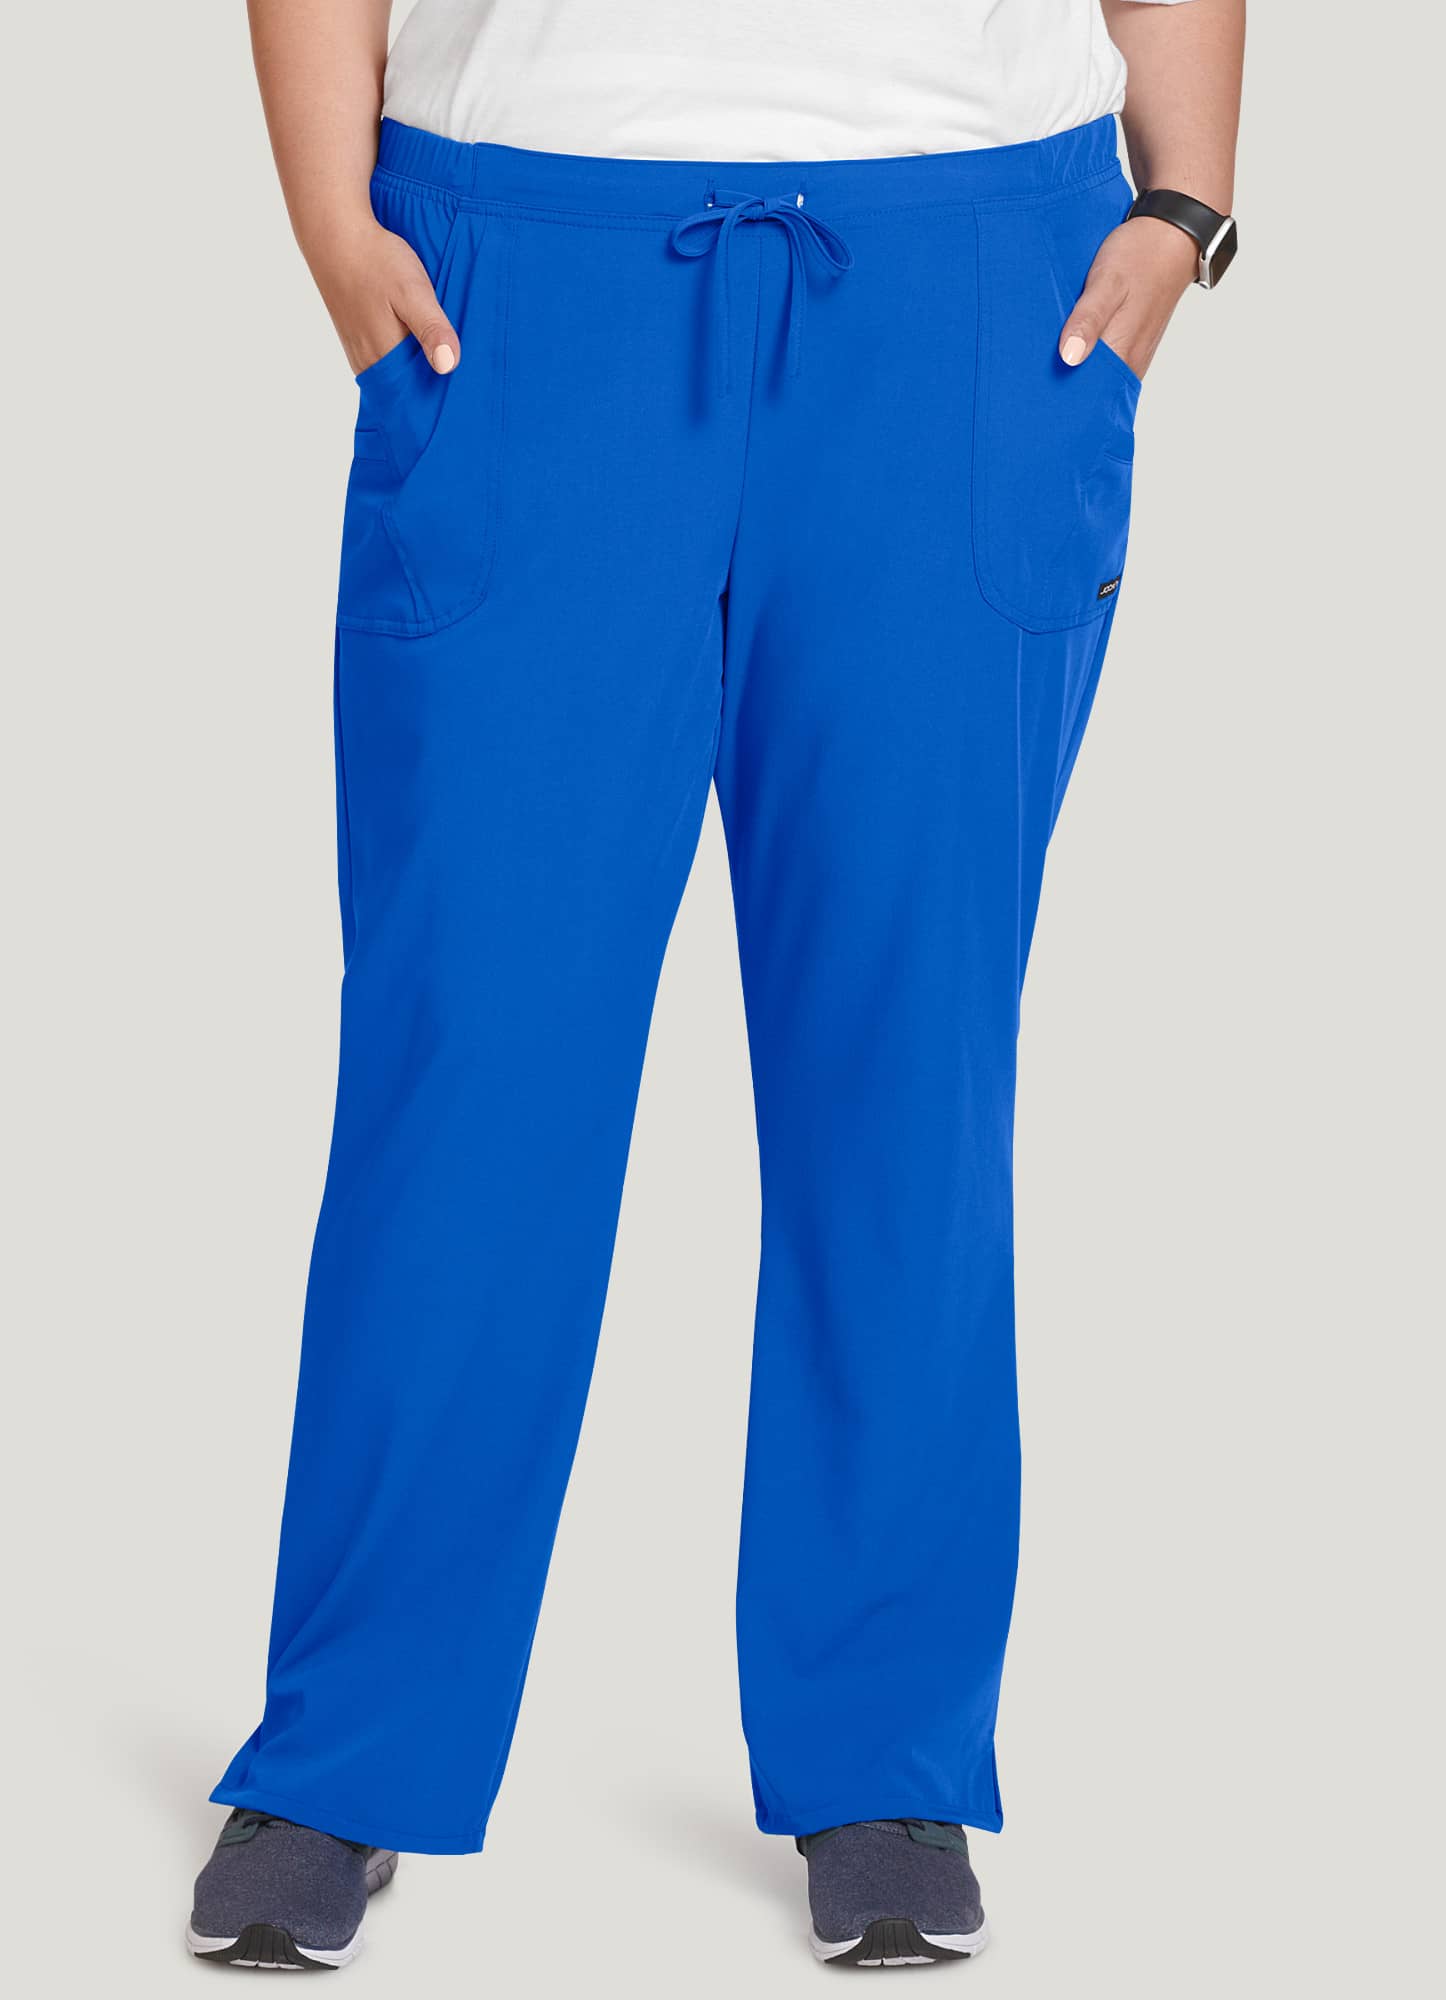 Blue Chic Store Stretch Active Pants Comfyfit Unisex Quick Drying Pants  Solid Color Wide Leg Sweatpants